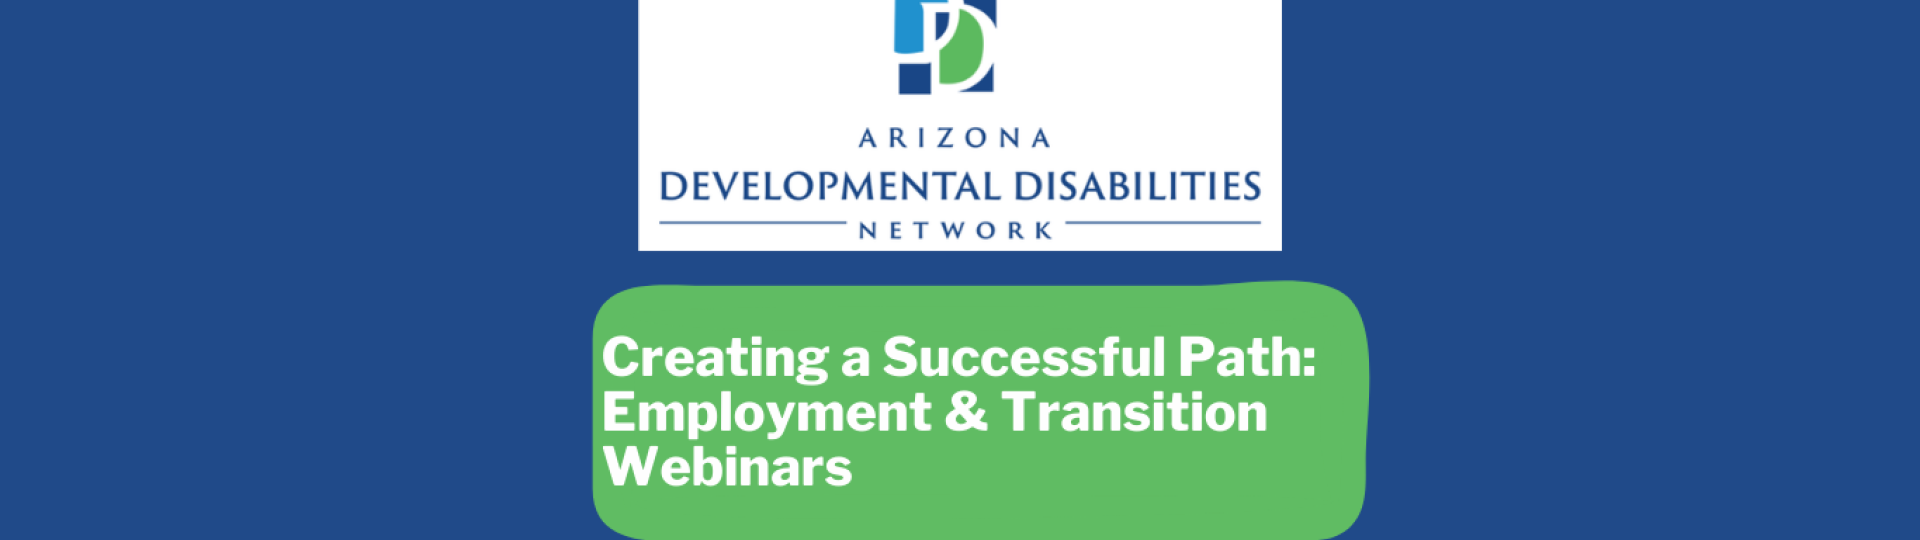 Arizona developmental disabilities network blue-green